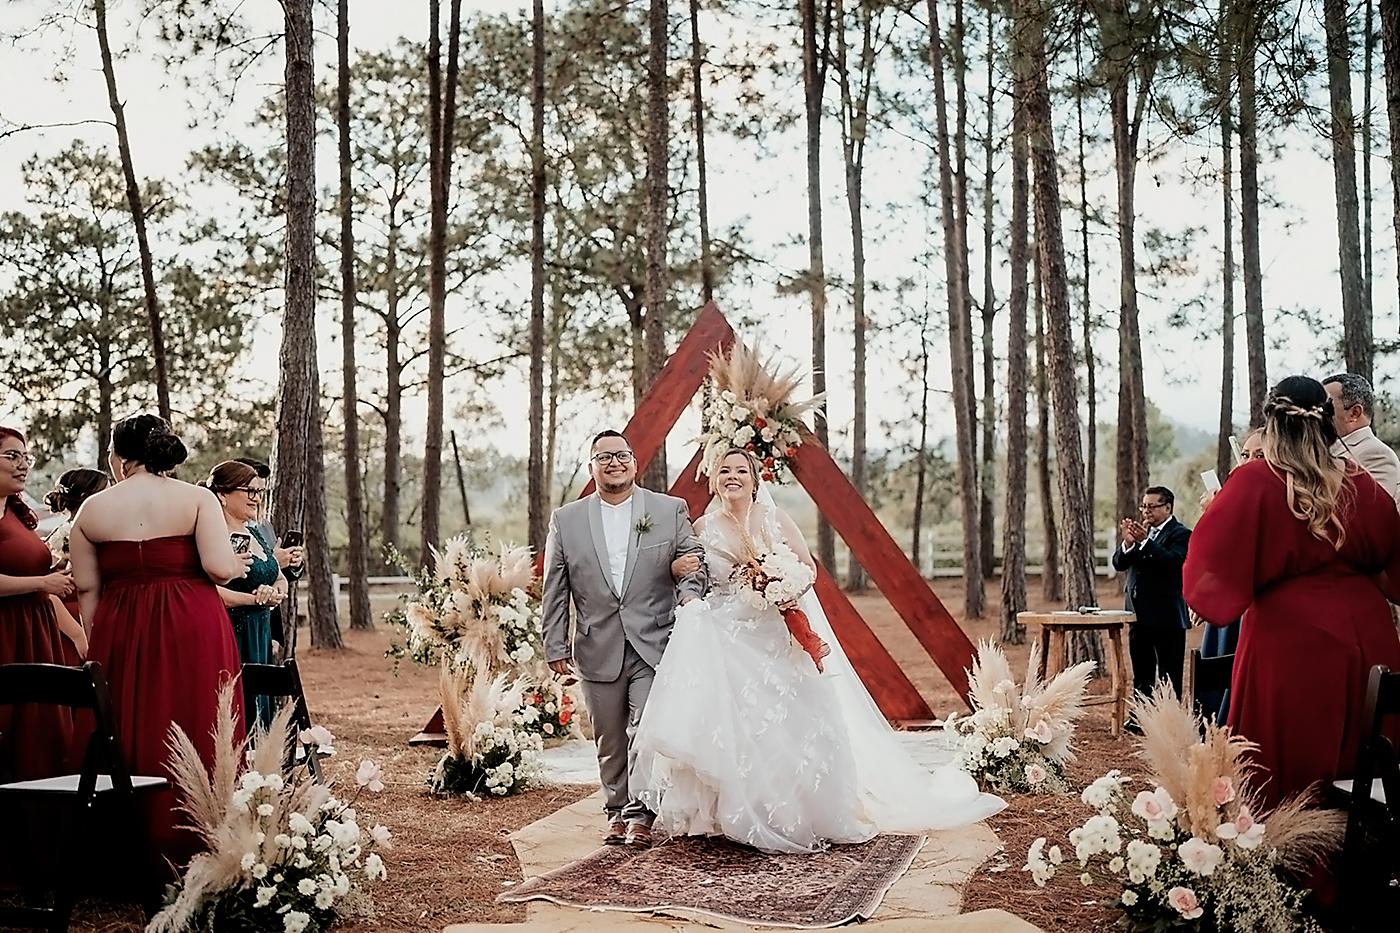 La boda de Alejandra Villela Barletta y David Cuellar Boves